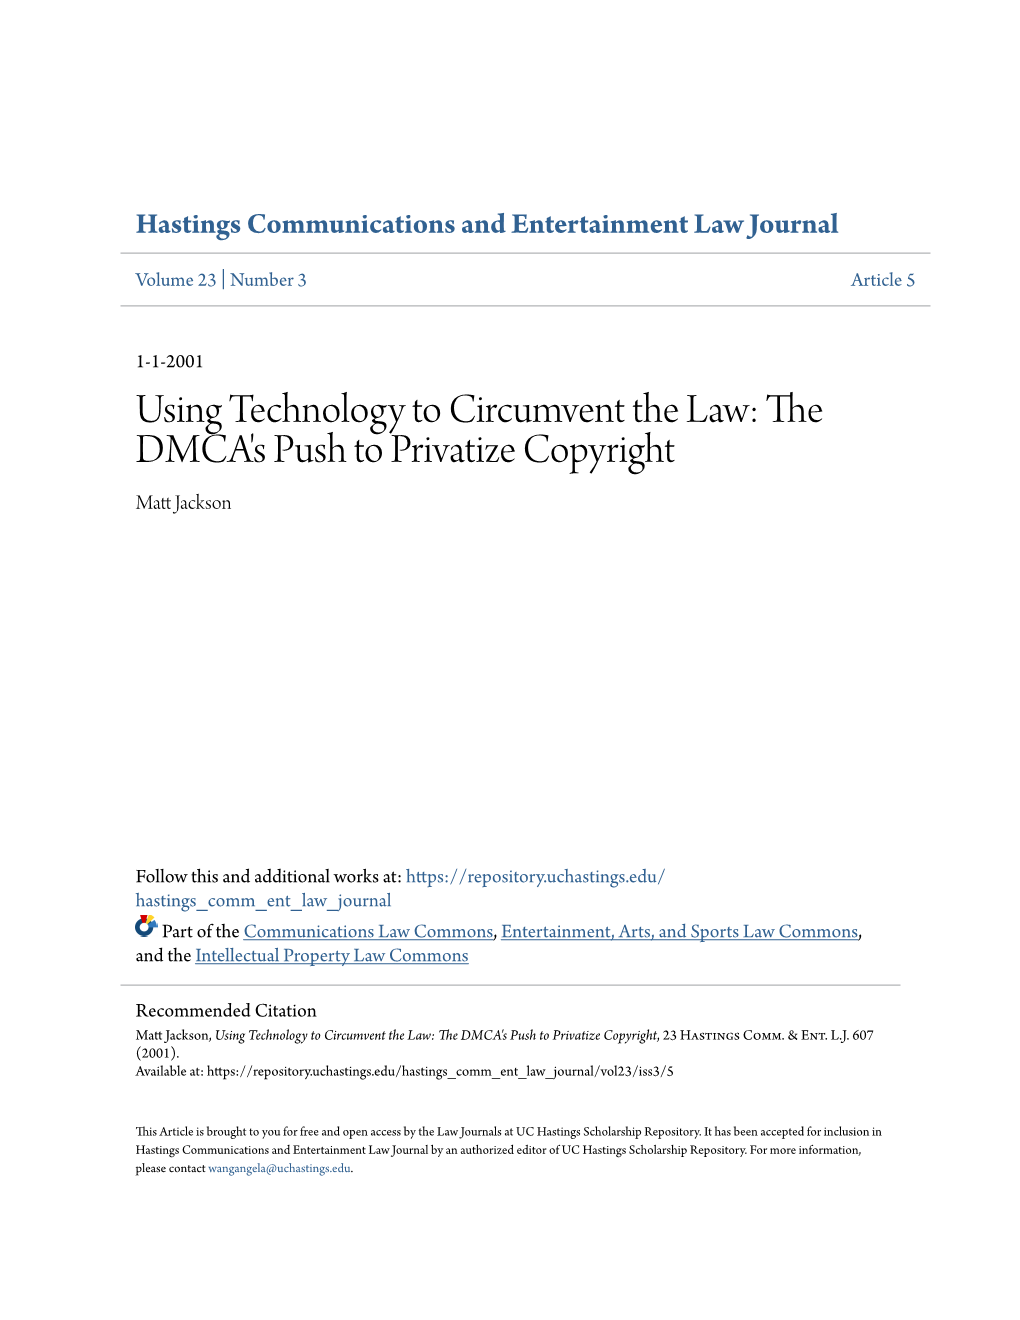 Using Technology to Circumvent the Law: the DMCA's Push to Privatize Copyright Matt Aj Ckson